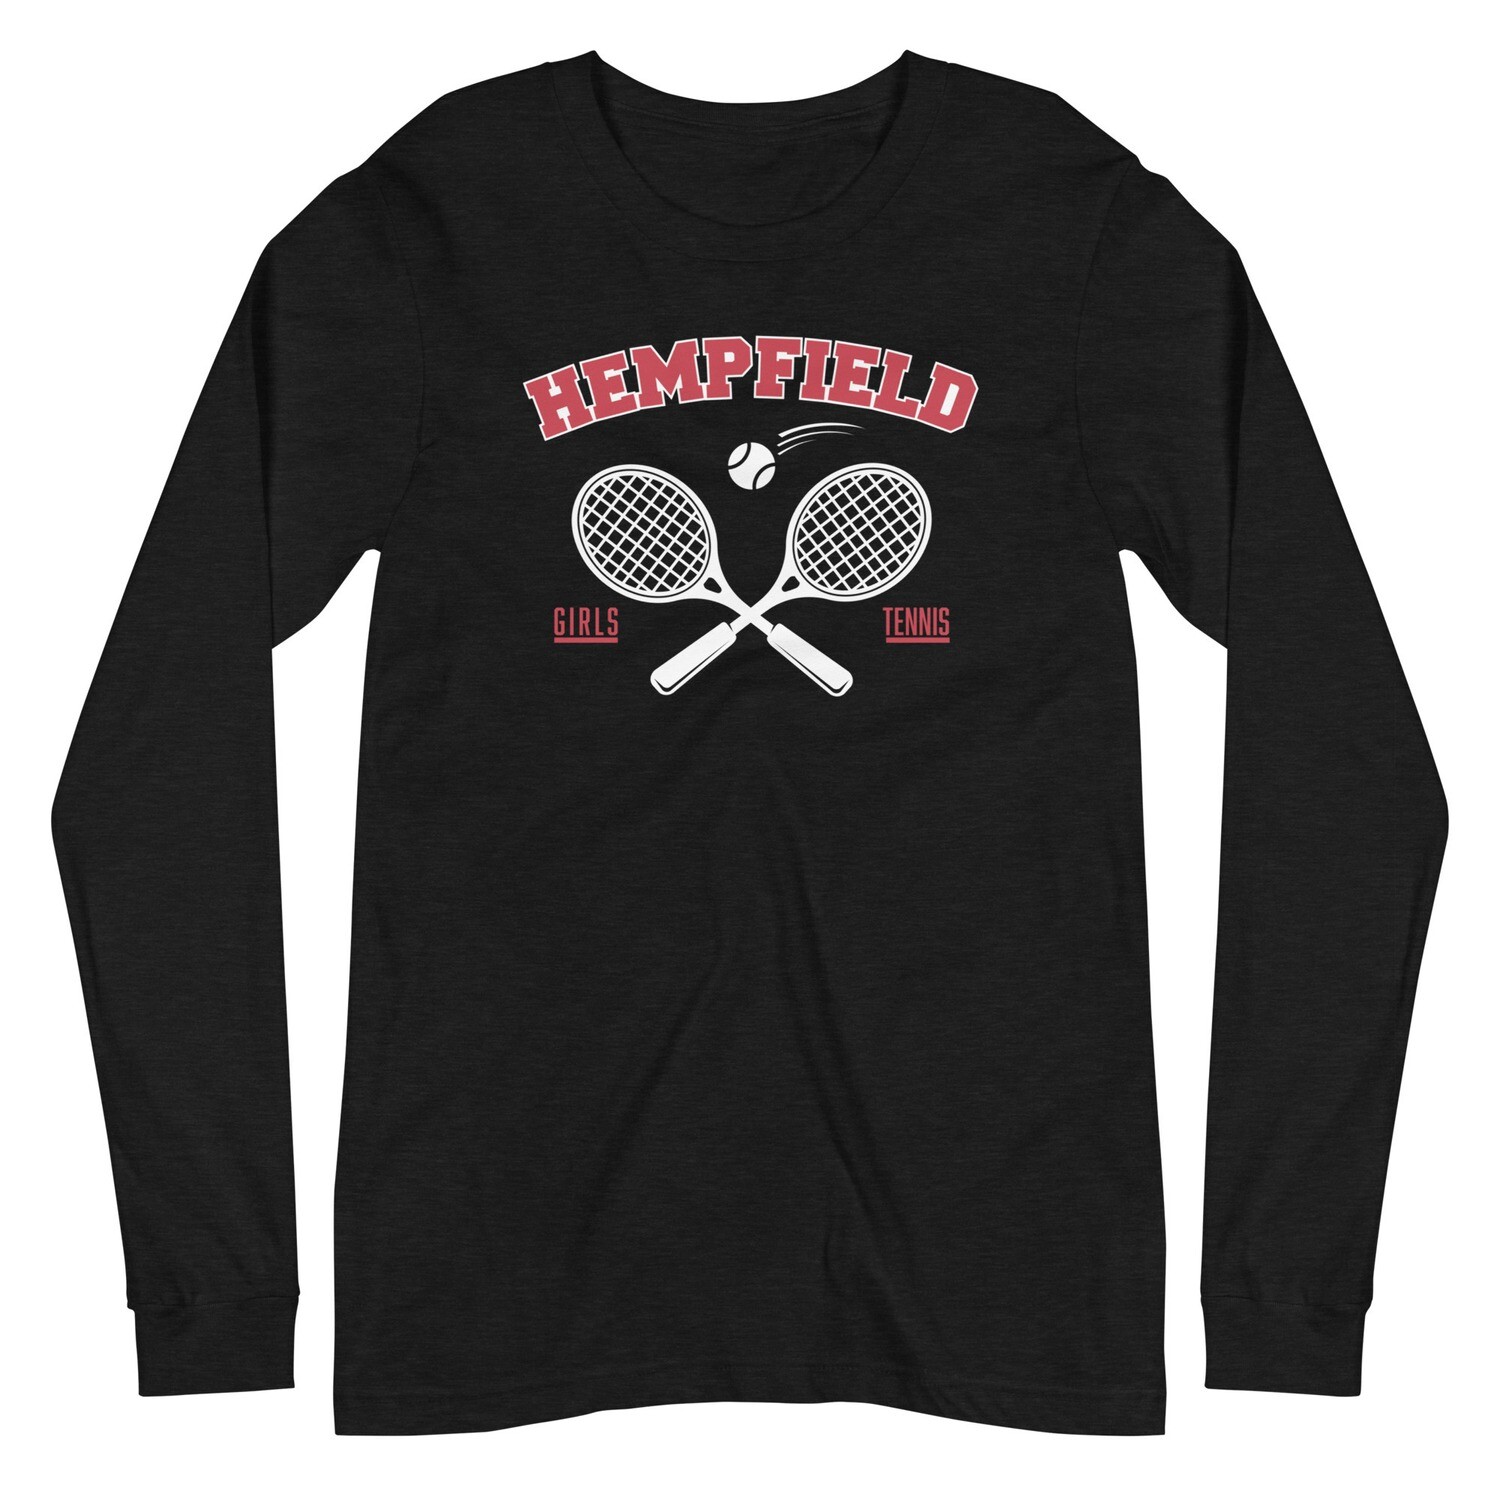 Hempfield Girls Tennis - Unisex Long Sleeve Tee